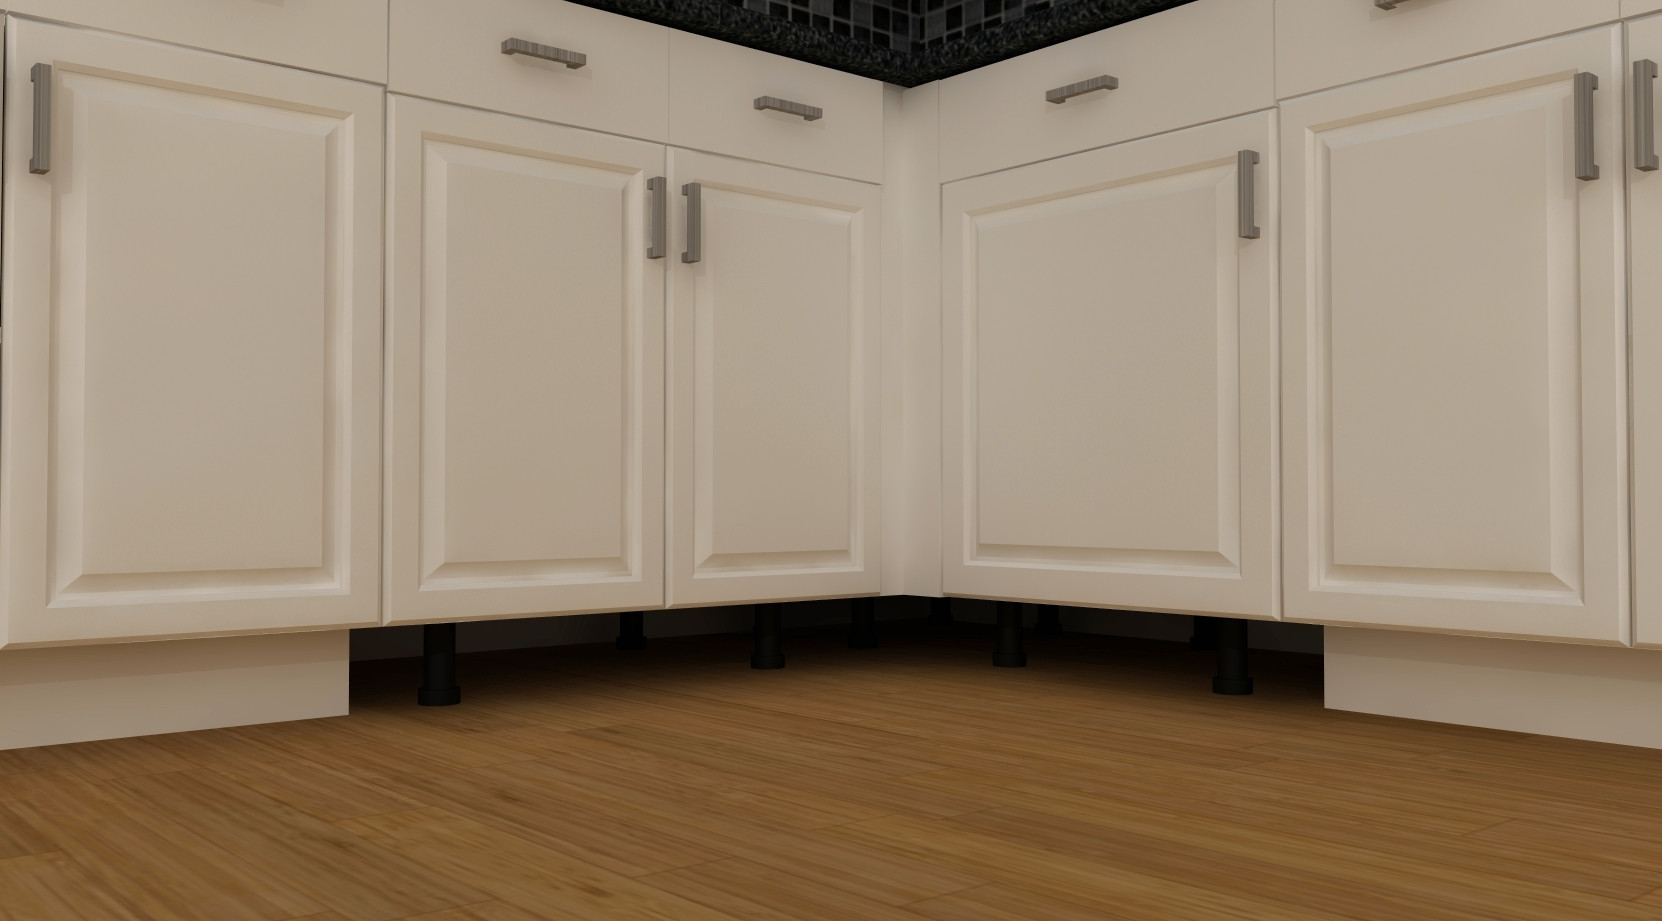 Kitchen Cabinet Toe Kicks
 Tips for Installing IKEA Toe Kicks